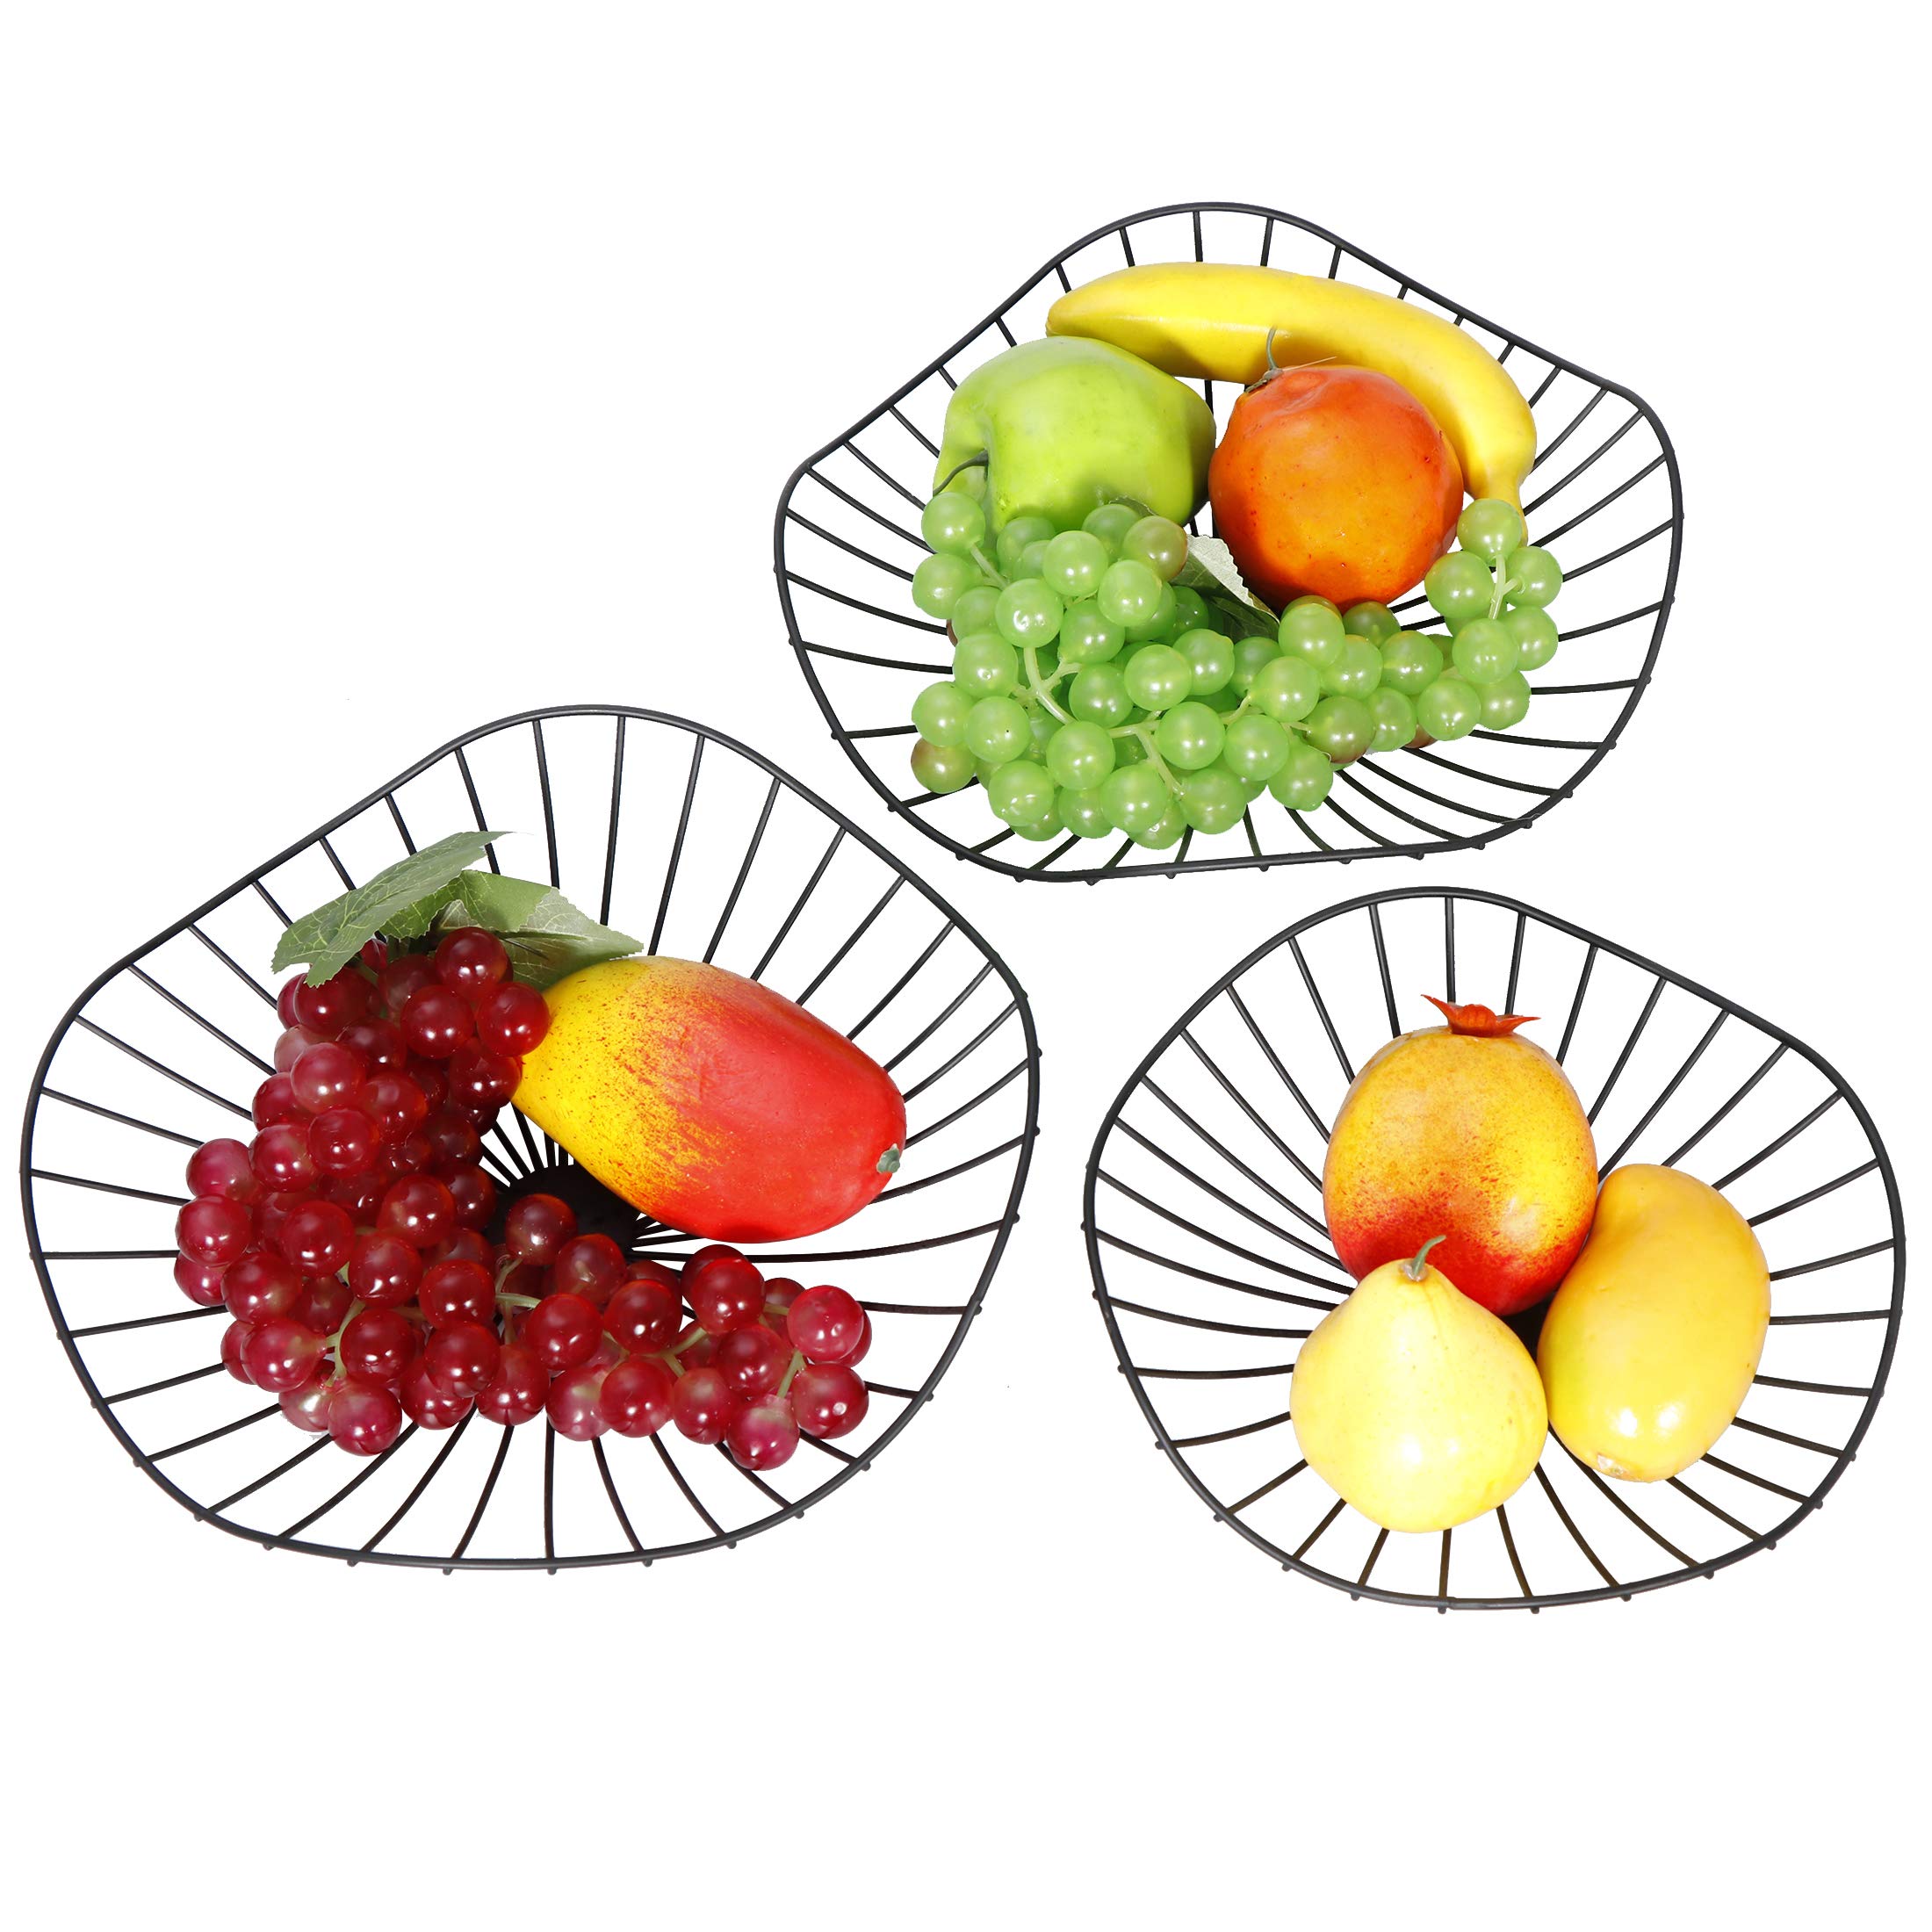 RAUVOLFIA 3-Tier Fruit Basket Holder Decorative Fruit Bowl Stand, Dining Table & Kitchen Counter Organizer, Black